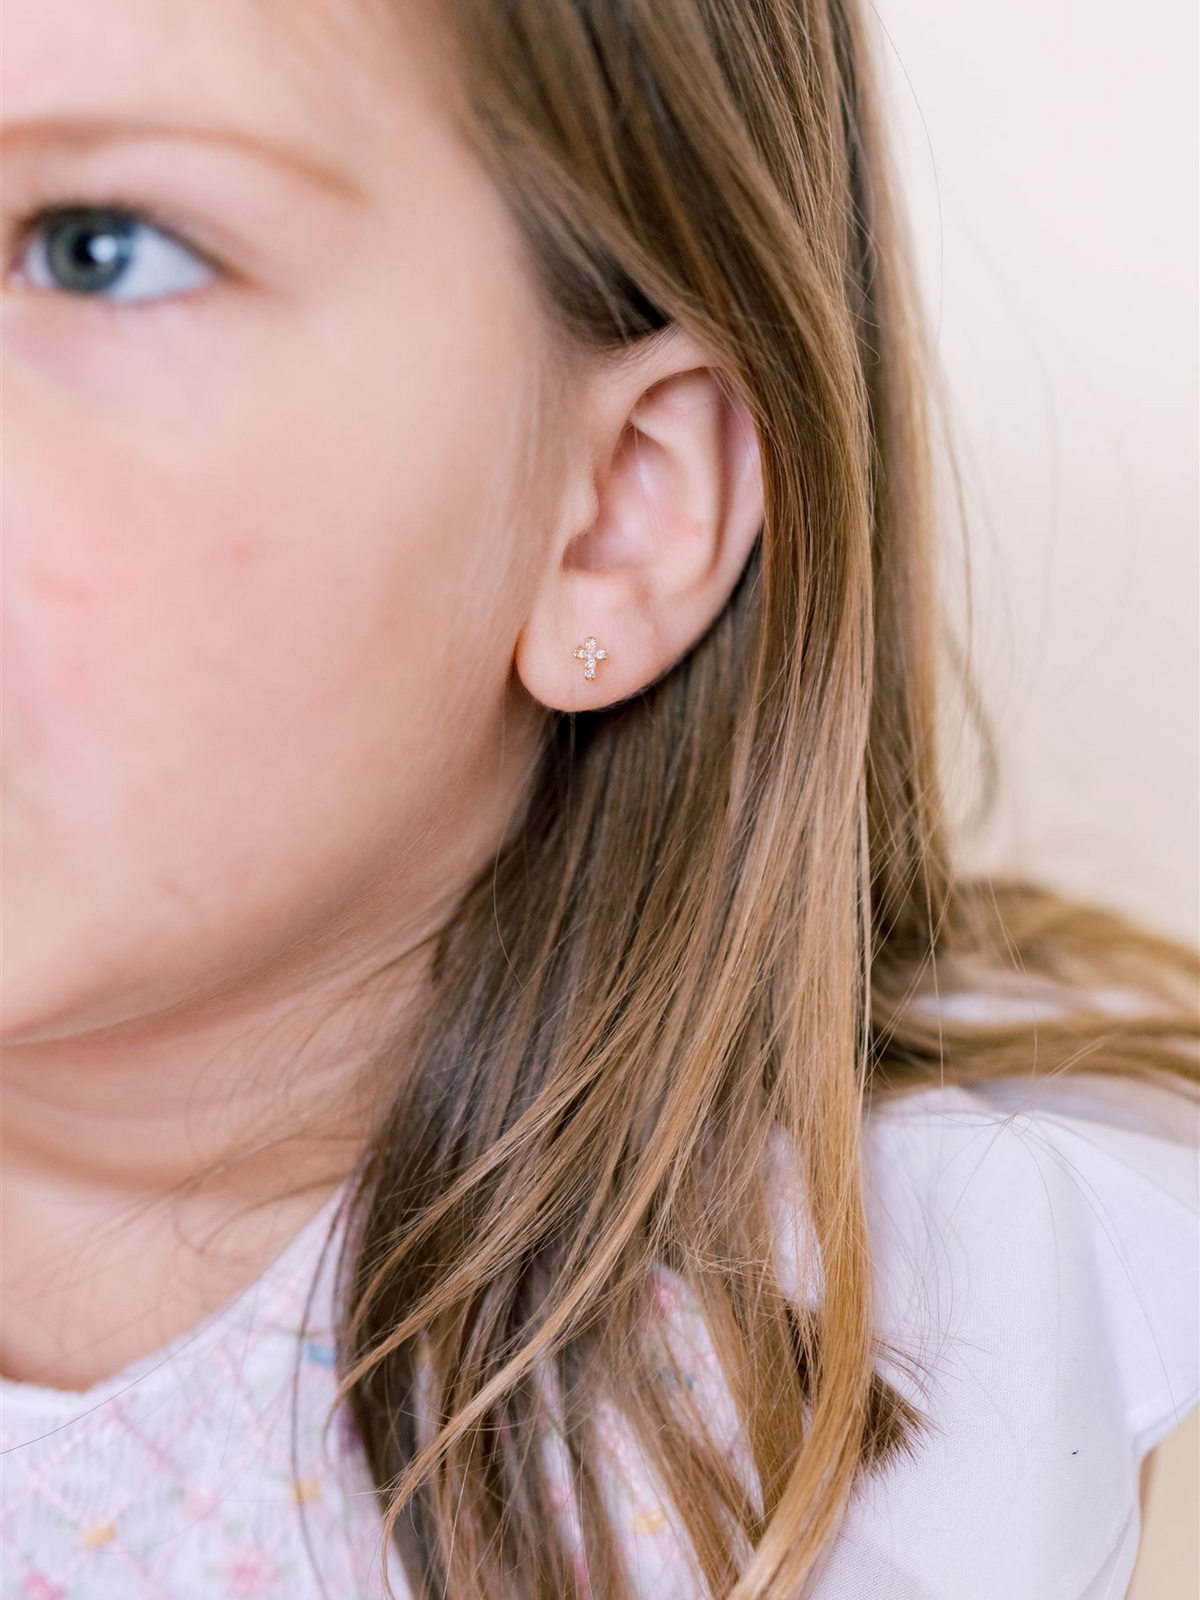 Mini Yellow Gold Diamond Cross Stud Earrings on Child's Ear